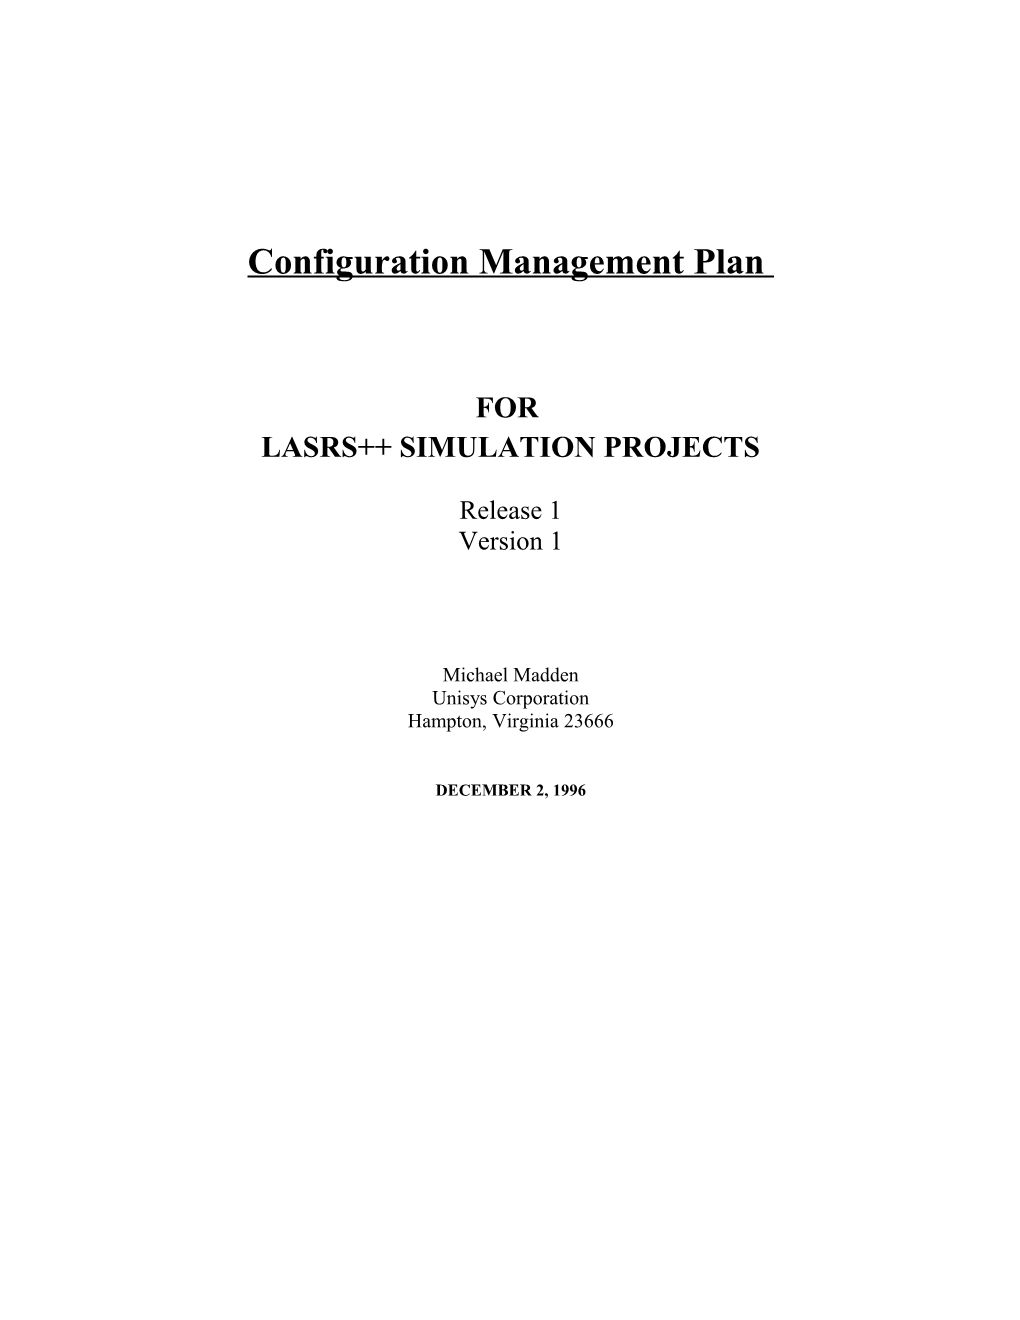 Software Configuration Management Plan Outline